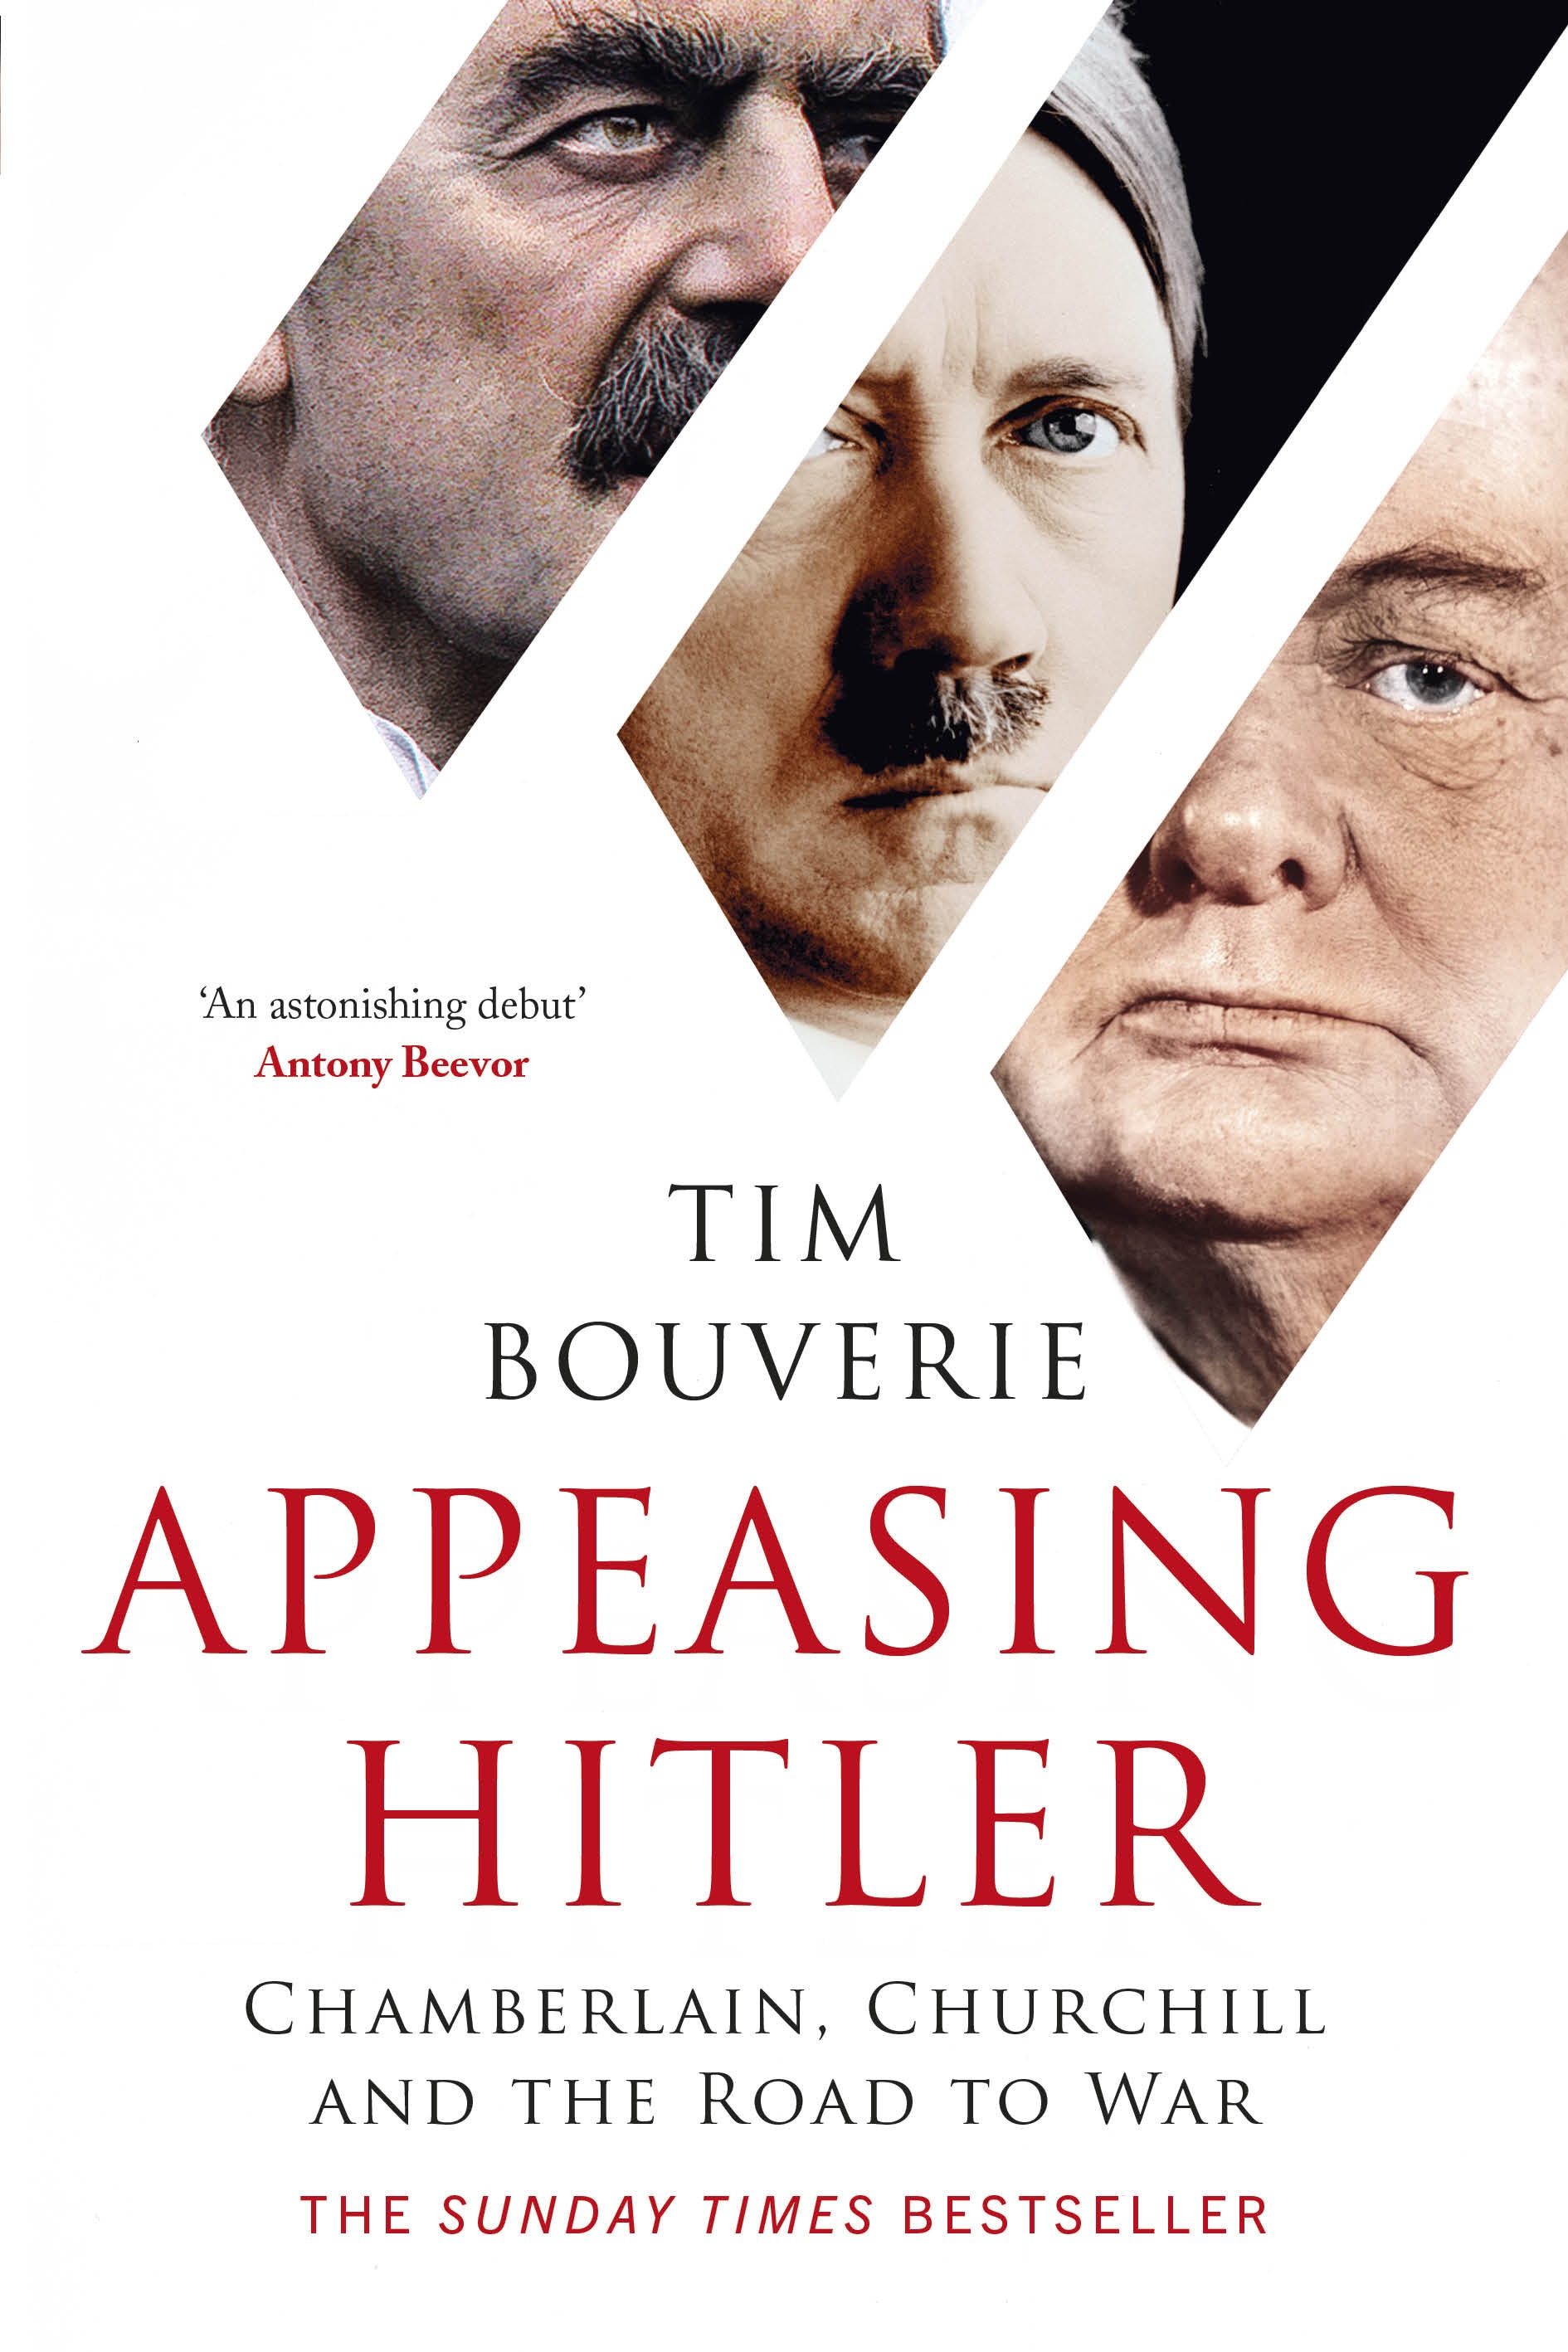 Book “Appeasing Hitler” by Tim Bouverie — April 18, 2019